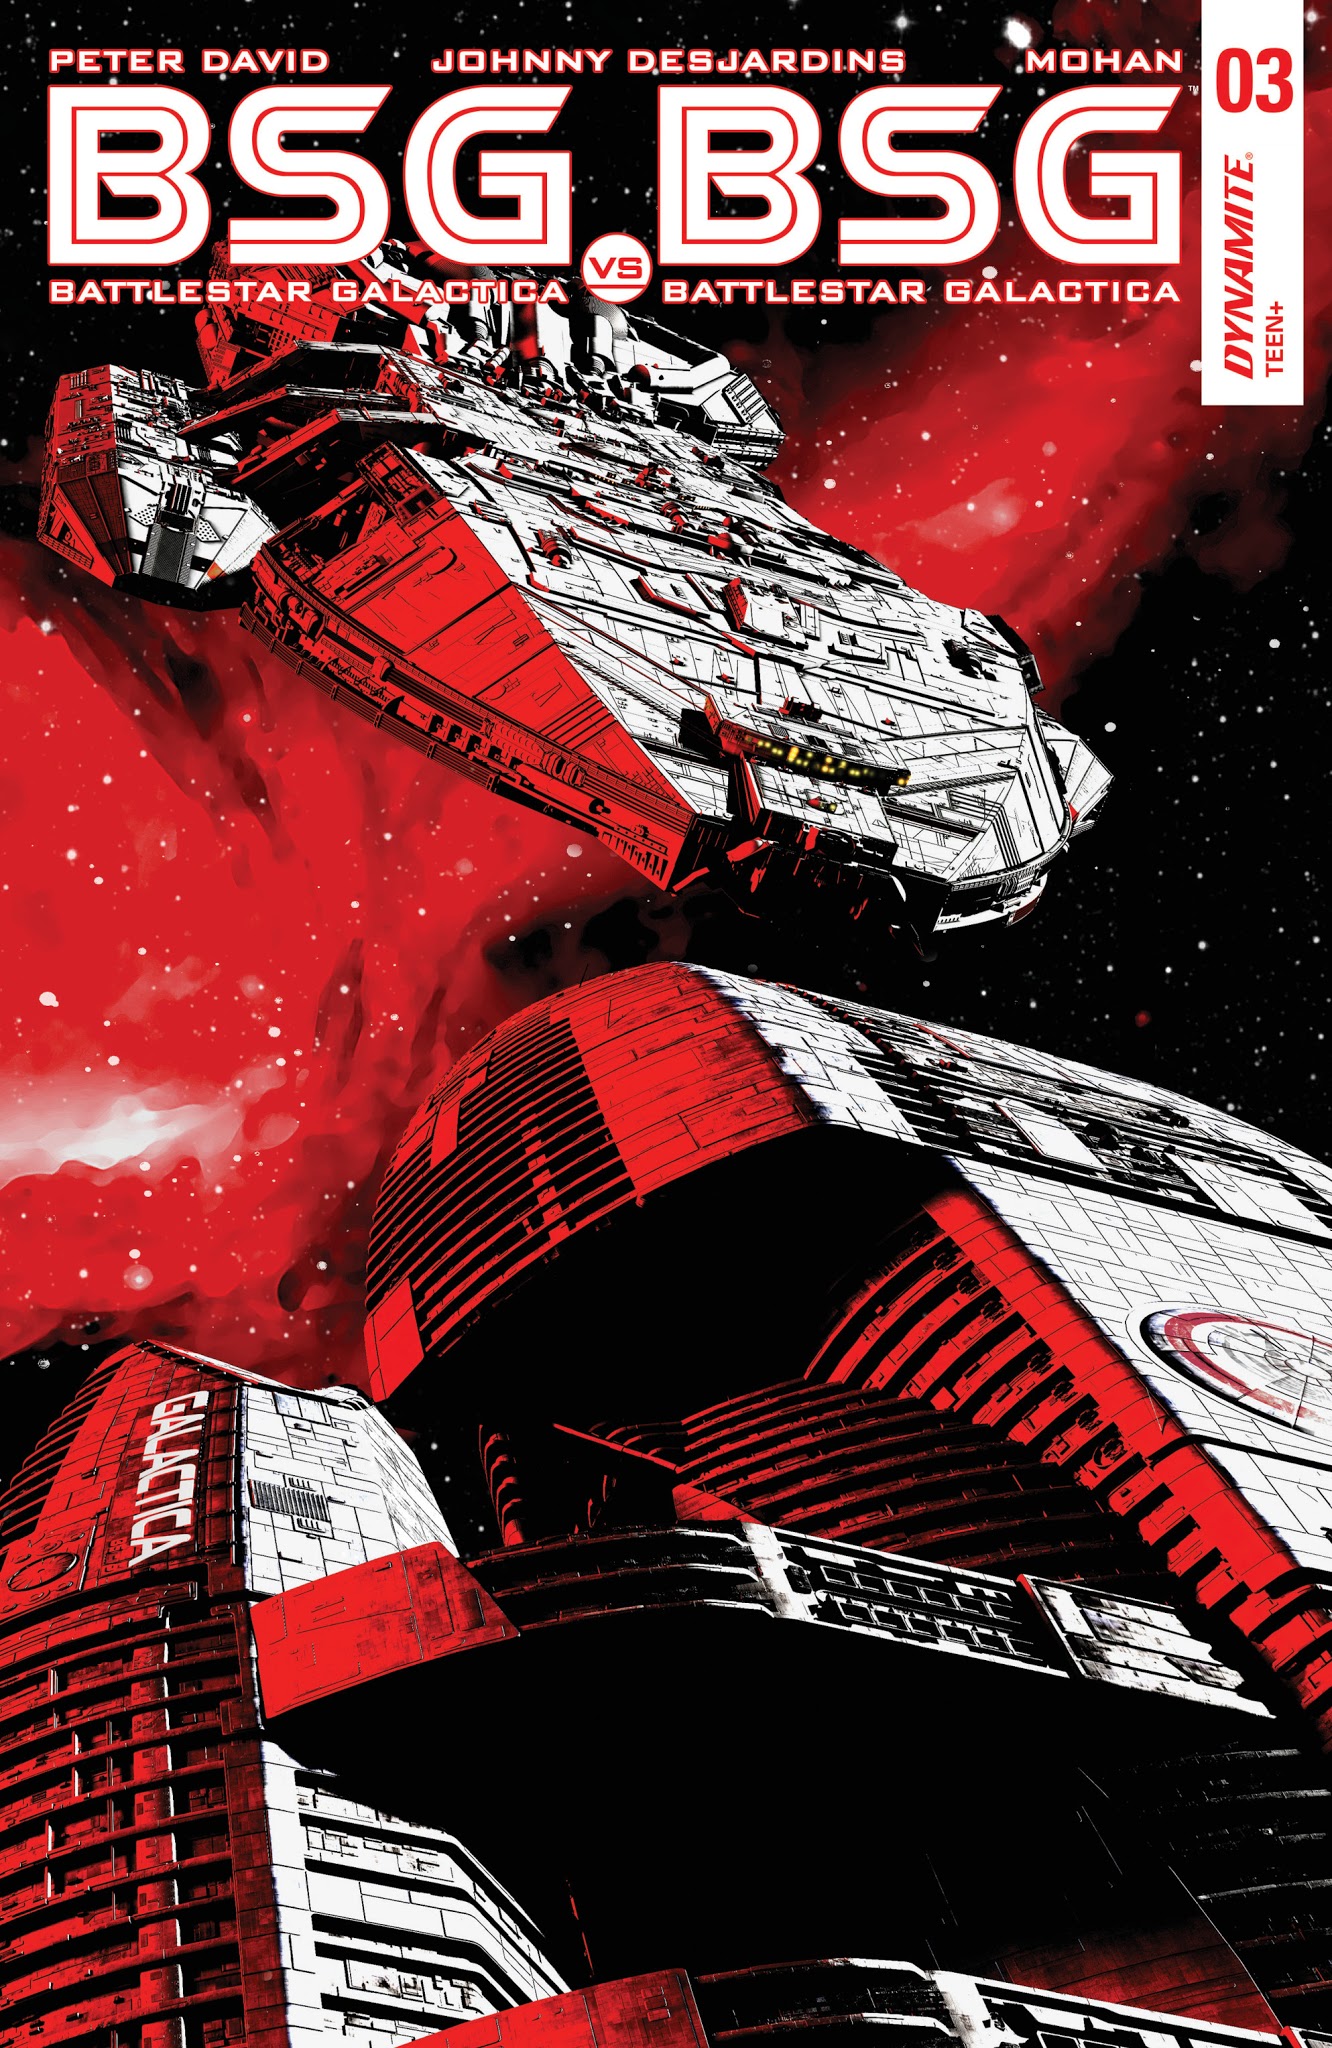 Read online Battlestar Galactica BSG vs. BSG comic -  Issue #3 - 1